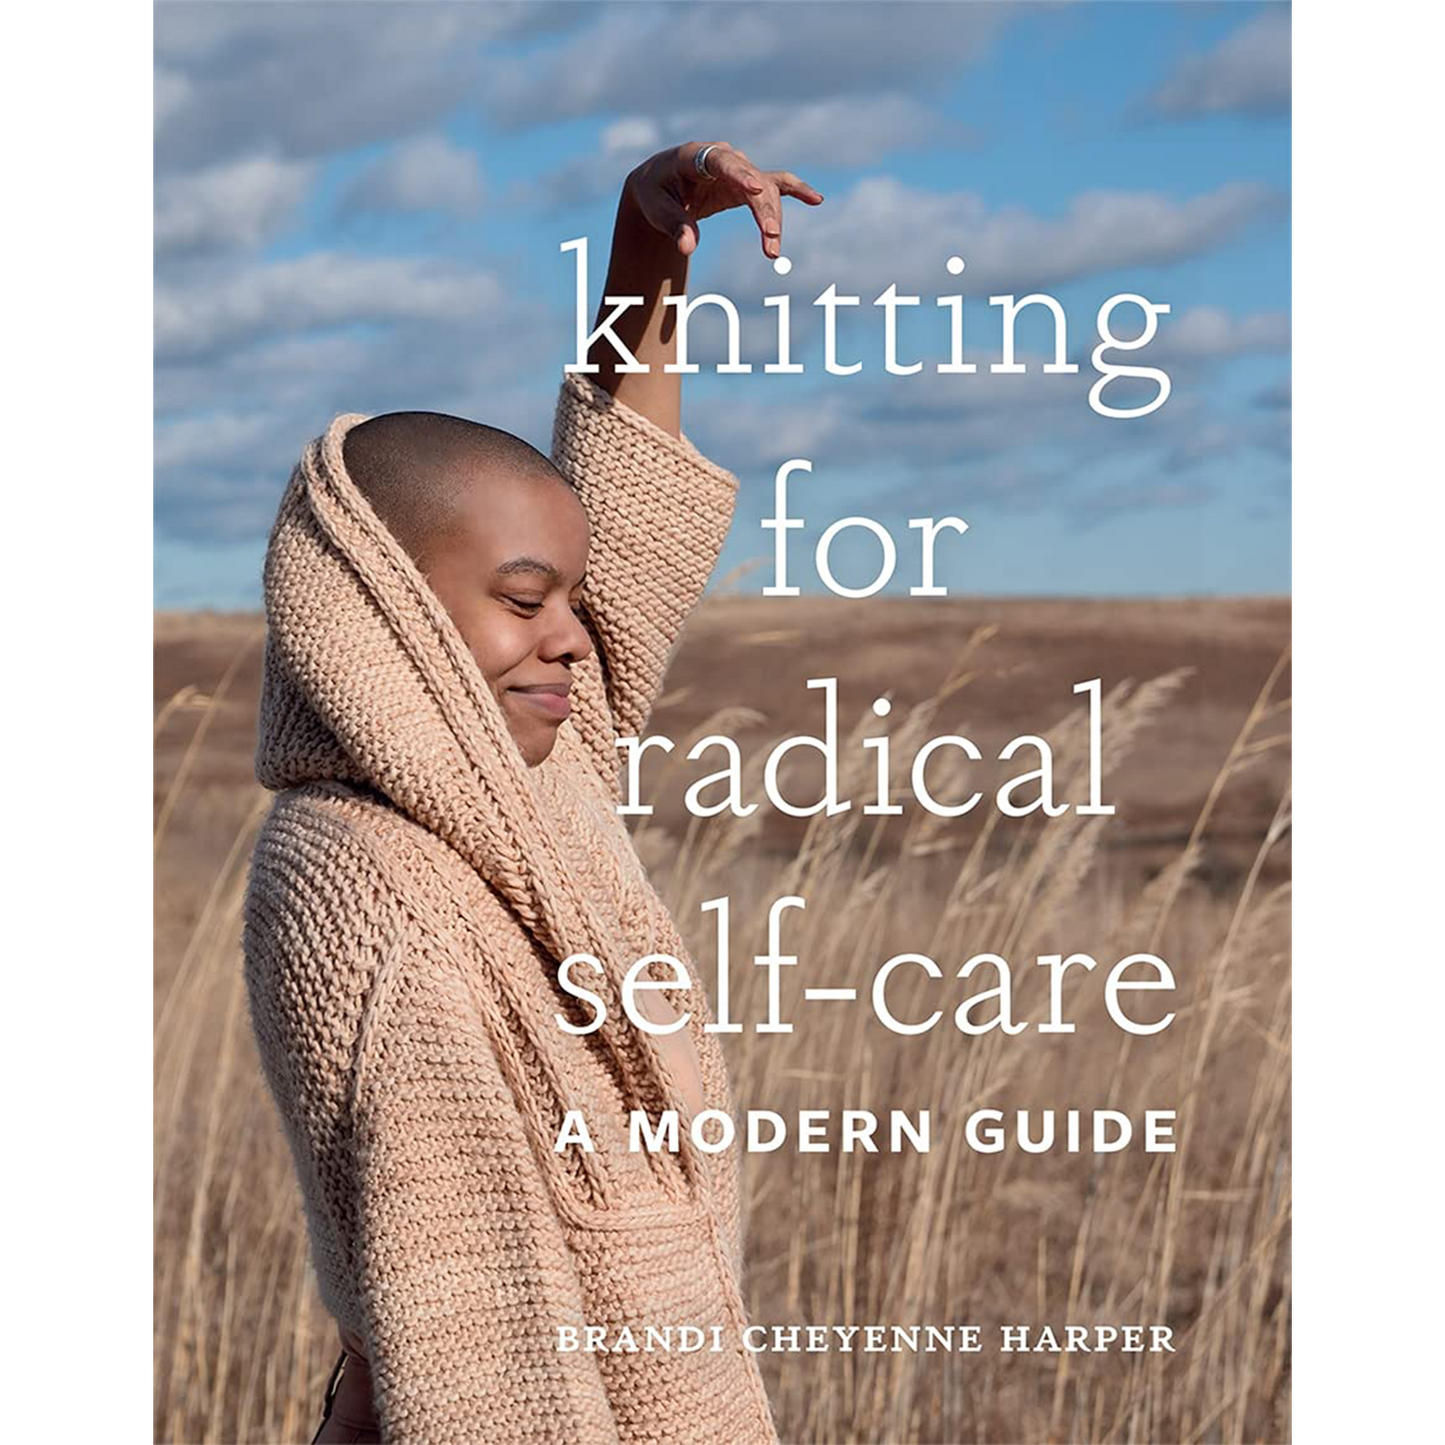 Knitting for Radical Self-Care: A Modern Guide